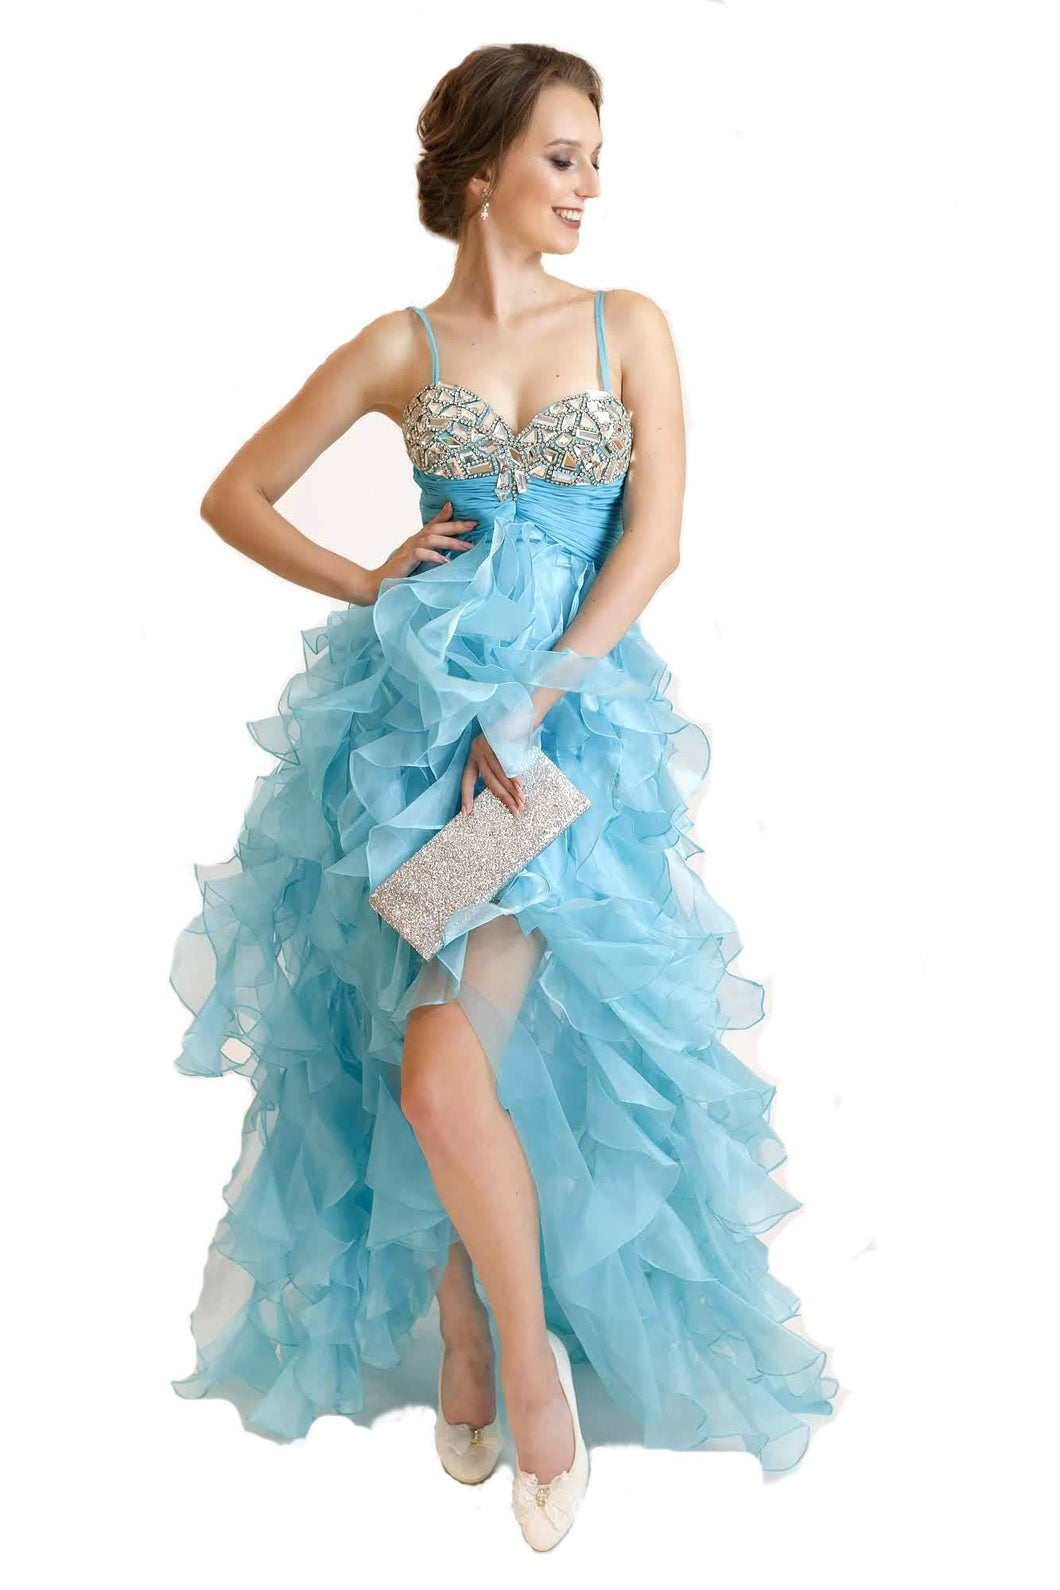 Sherri Hill Prom evening gown 2838, Blue, size 4